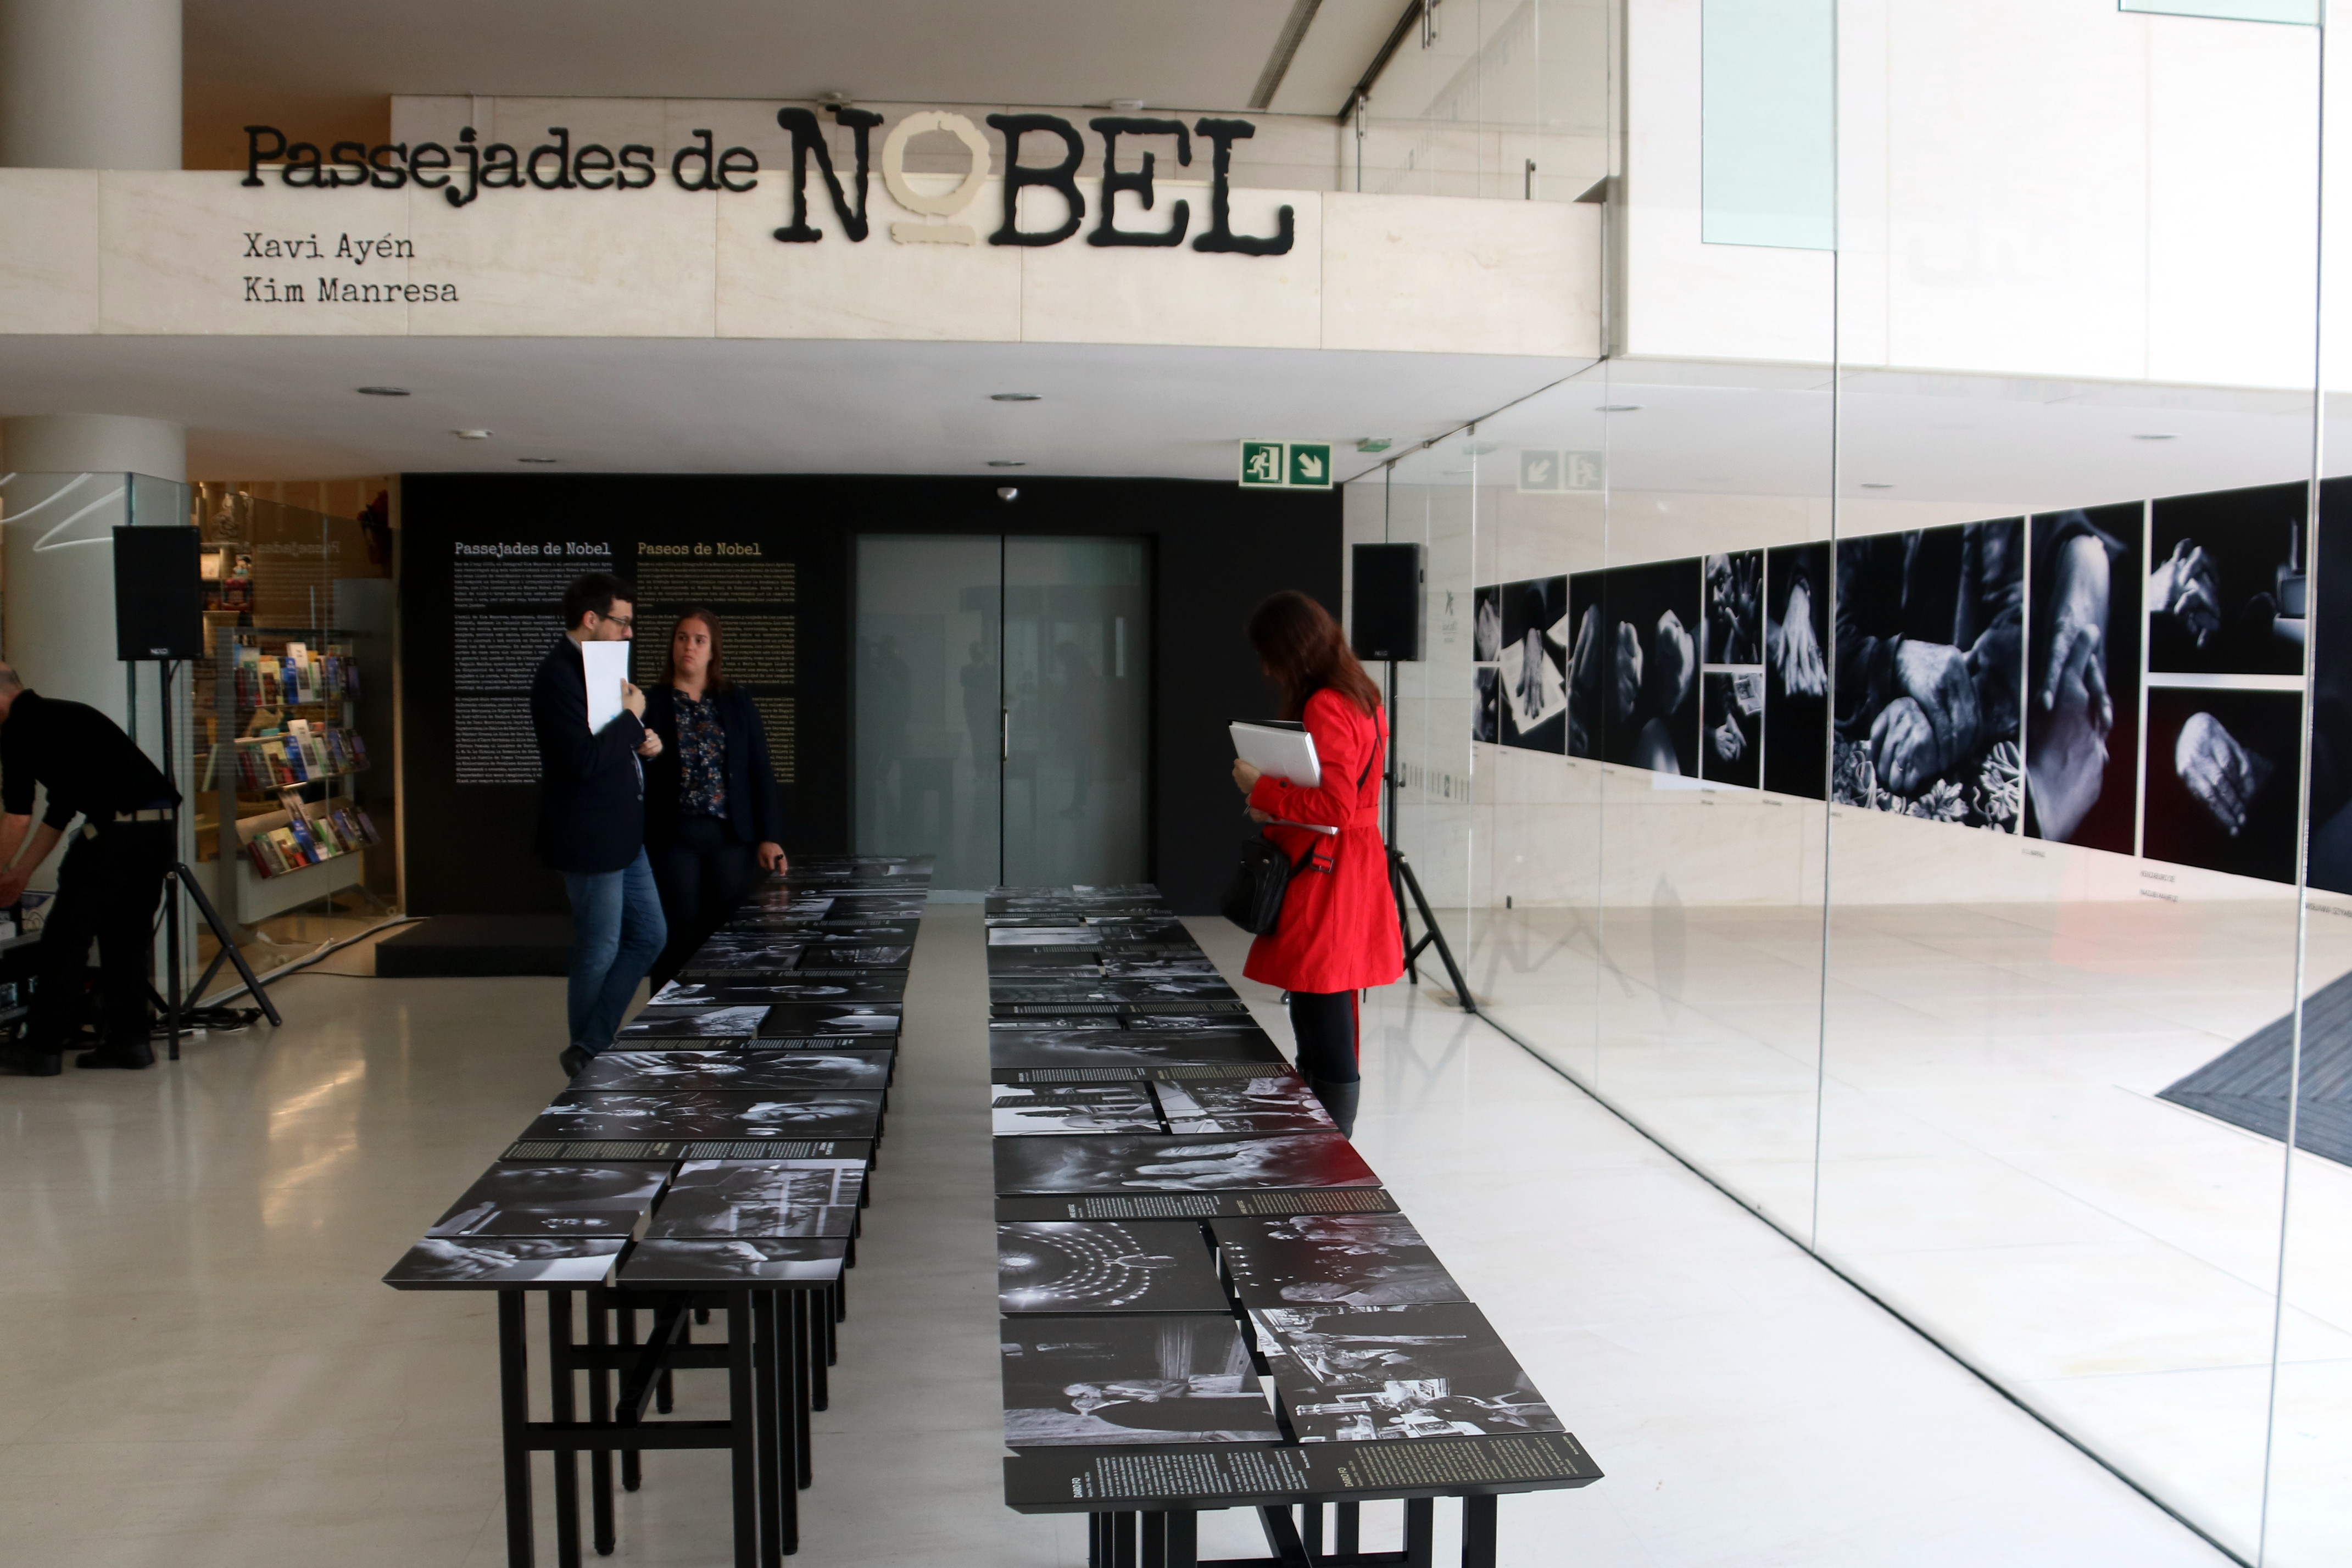 The exhibition 'Passejades de Nobel' of Kim Manresa and Xavi Ayén at the Caixaforum in Barcelona on April 16 2018 (by Pere Francesch)